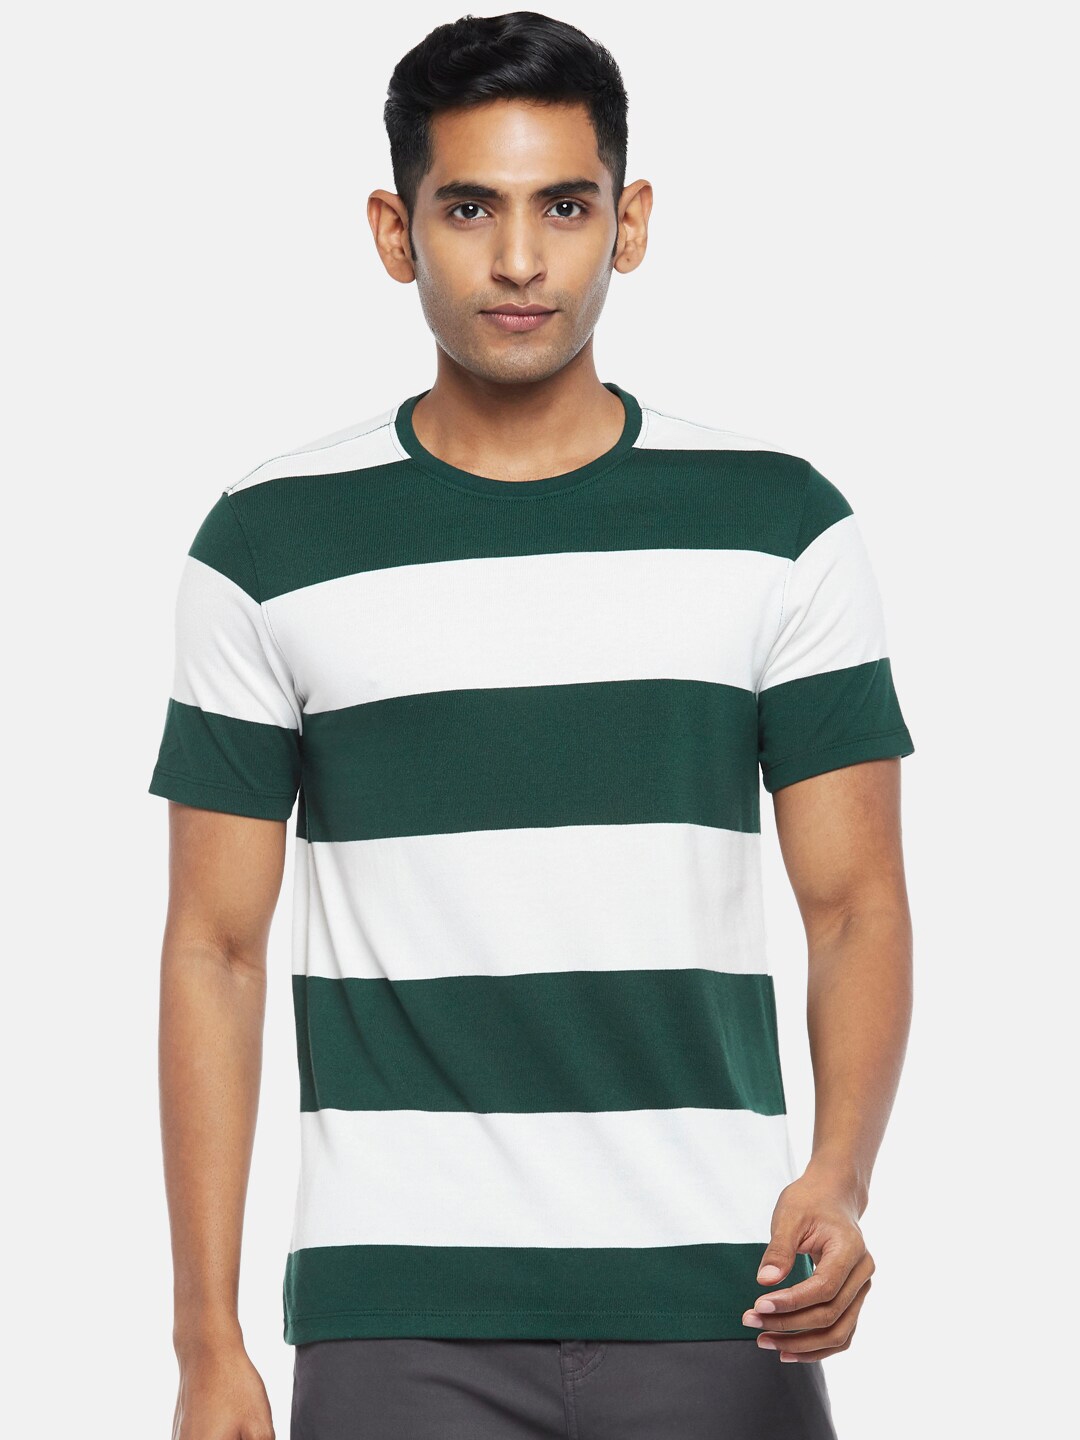 Striped T-shirt - Dark green/white striped - Men